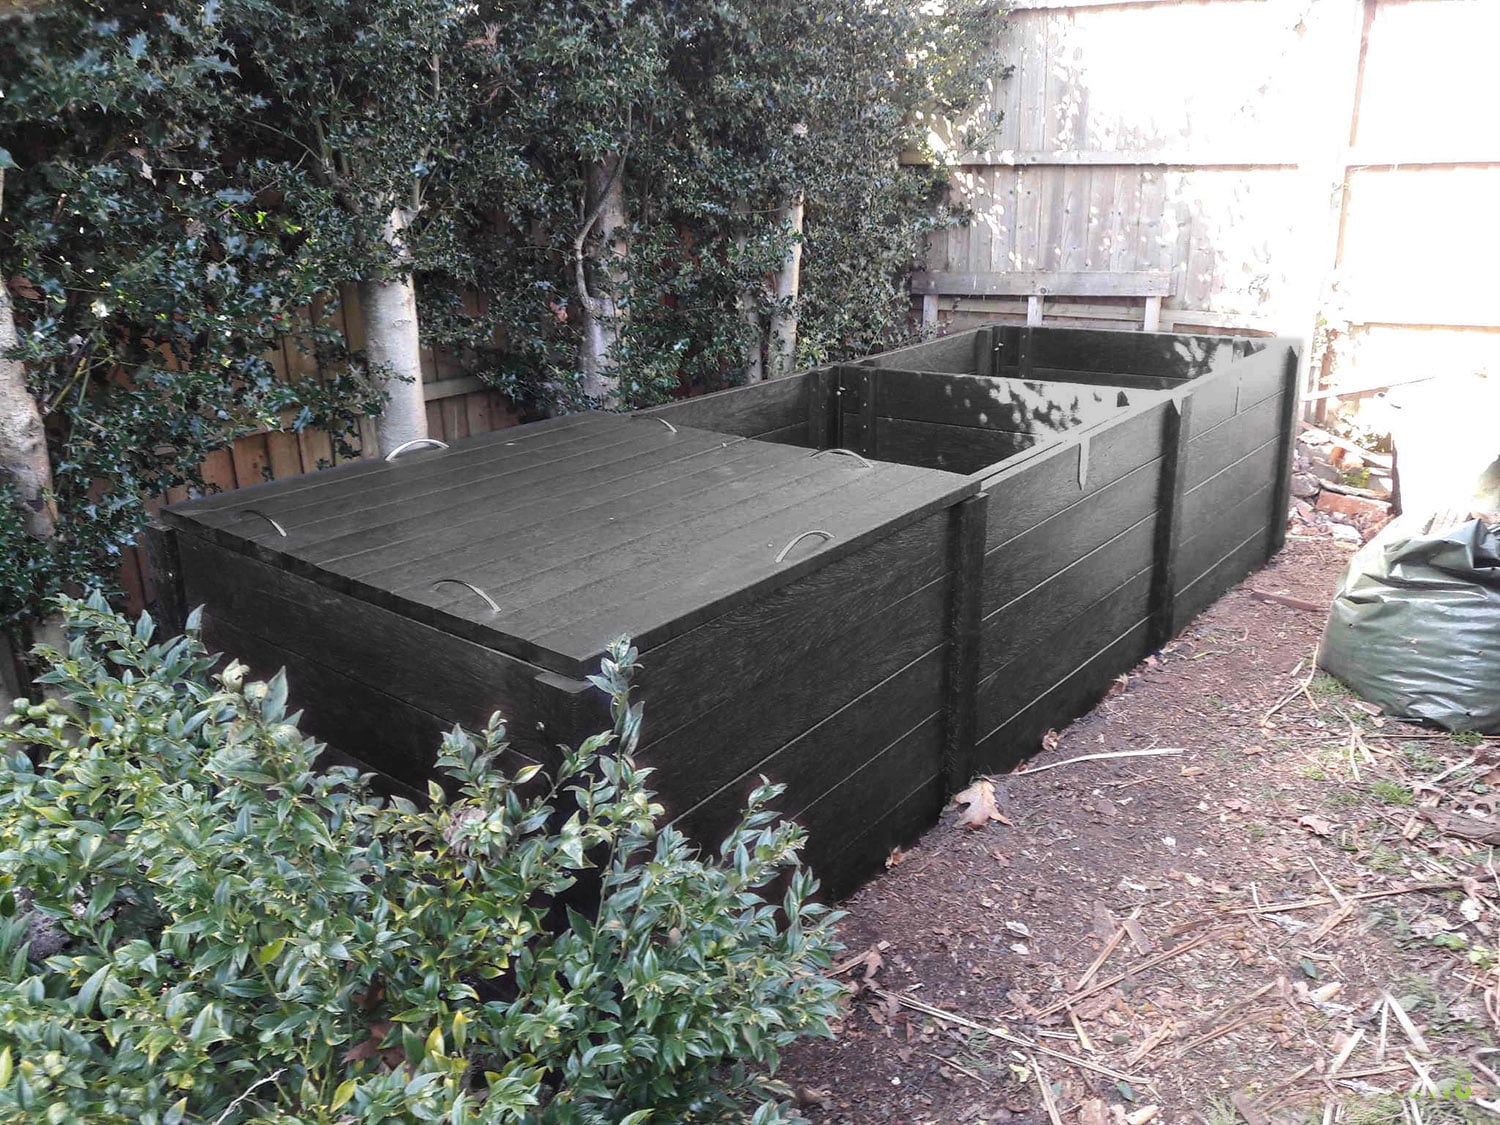 https://britishrecycledplastic.co.uk/wp-content/uploads/2021/11/callis-triple-heavy-duty-recycled-plastic-compost-bin-3.jpg